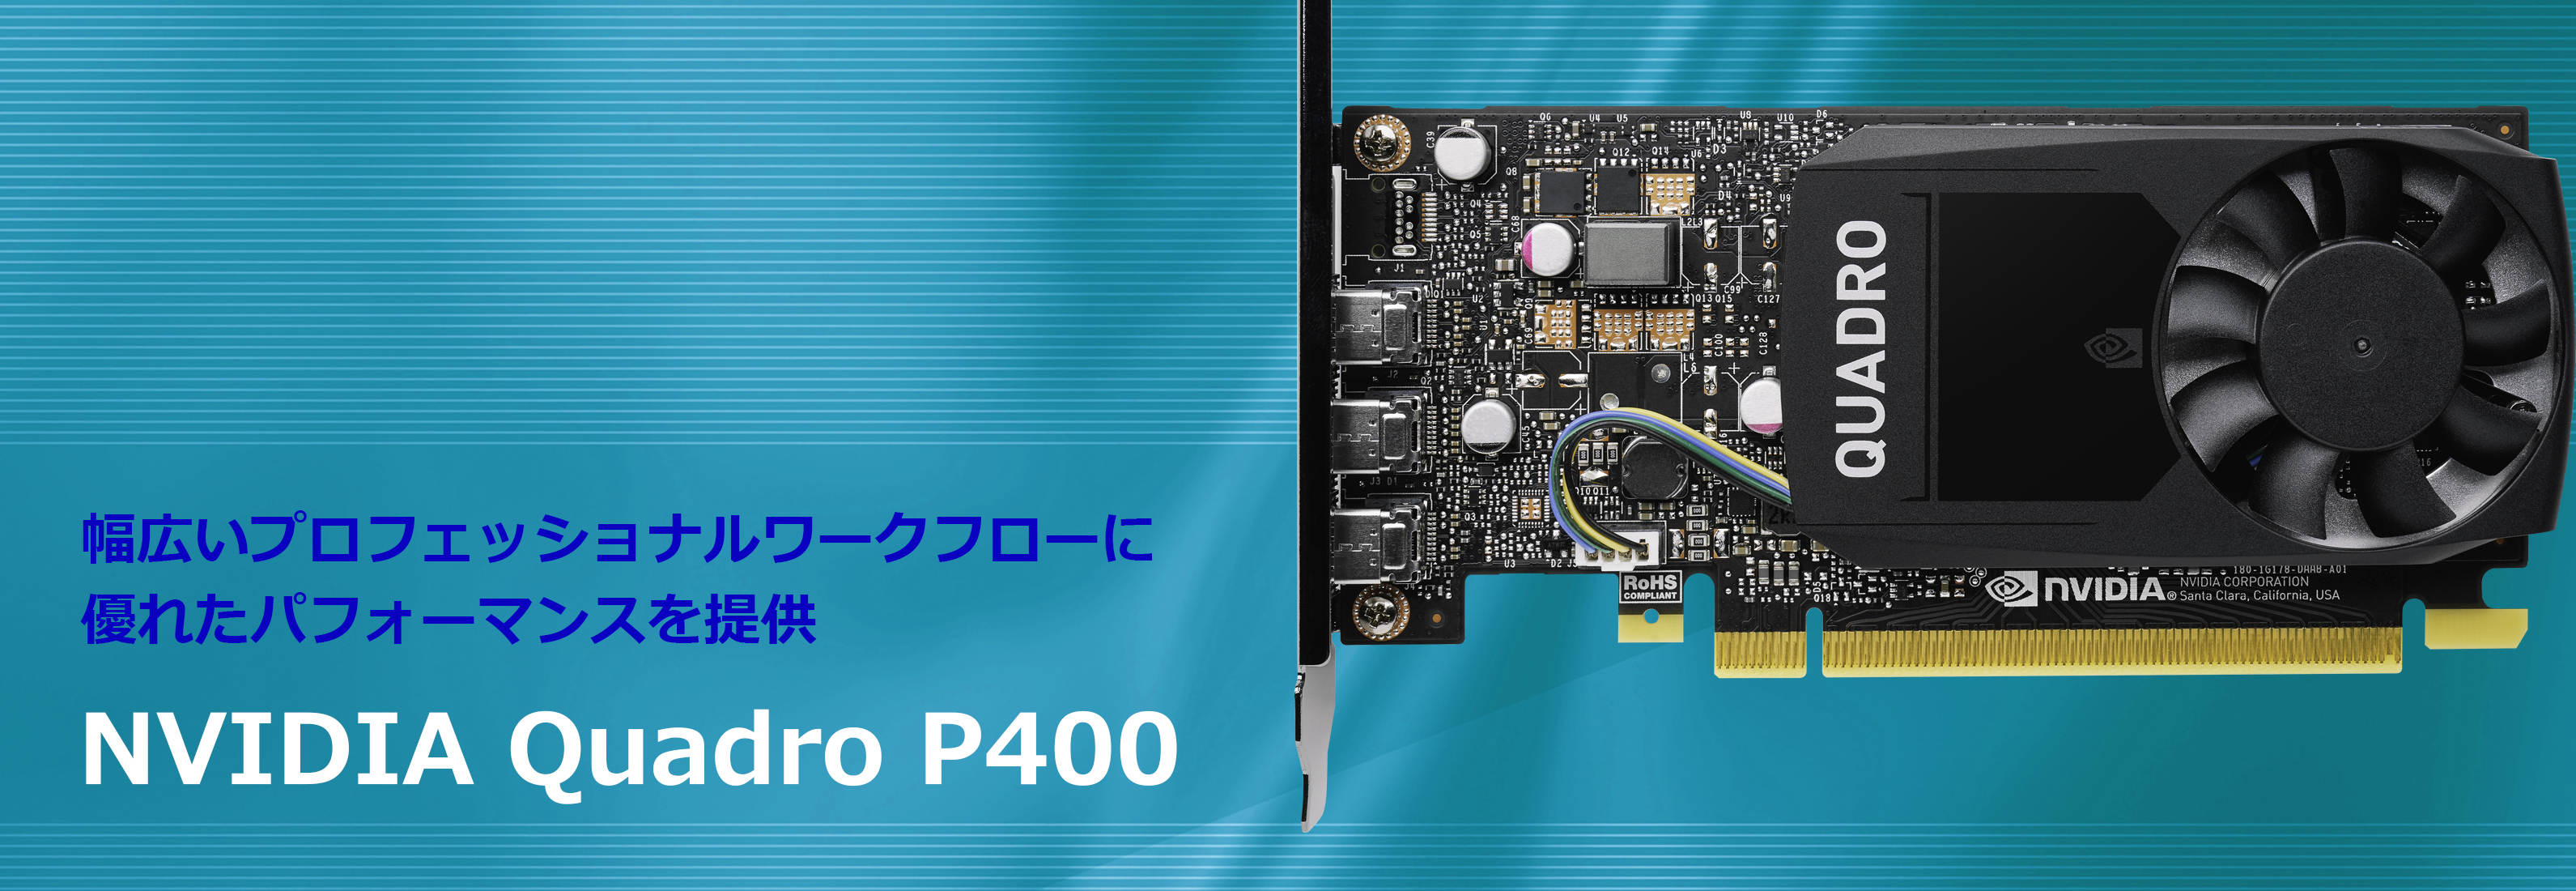 NVIDIA Quadro P400 | 菱洋エレクトロ株式会社 - NVIDIA製品情報